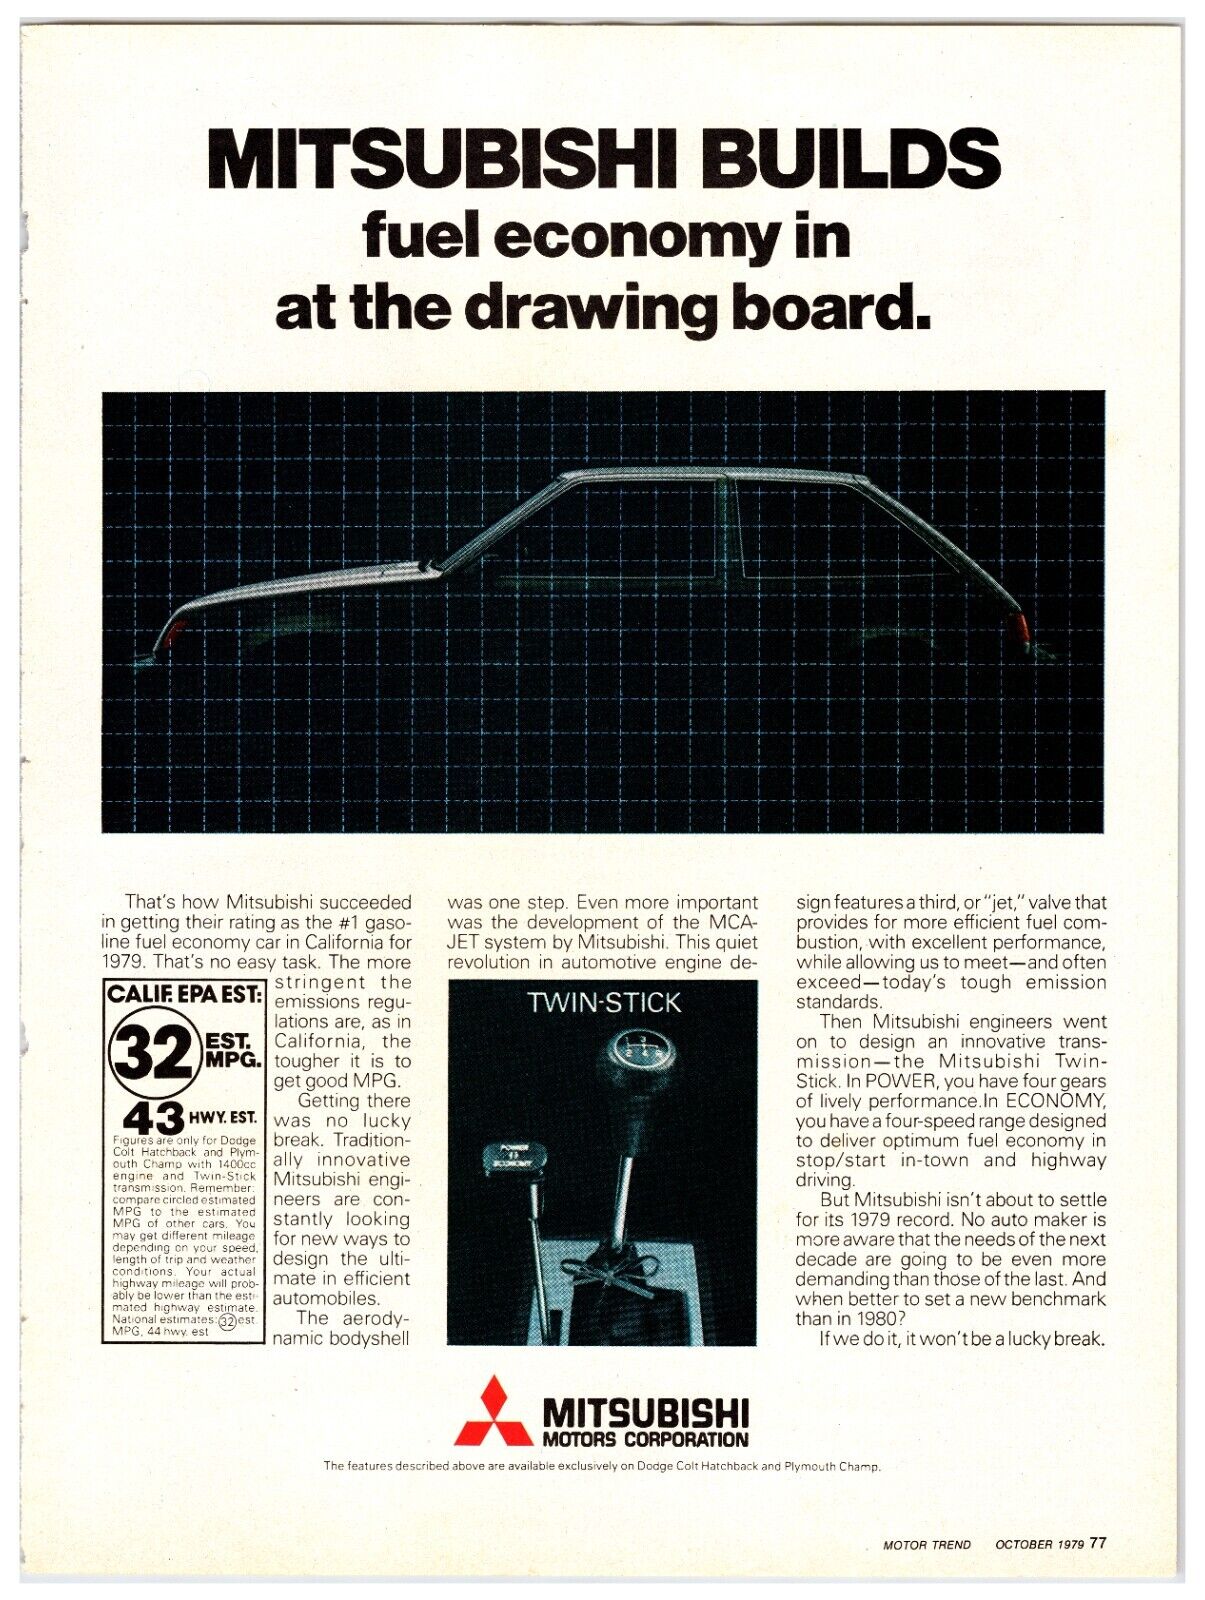 Original 1979 Mitsubishi Cars - Print Advertisement (8x11) *Vintage Original*